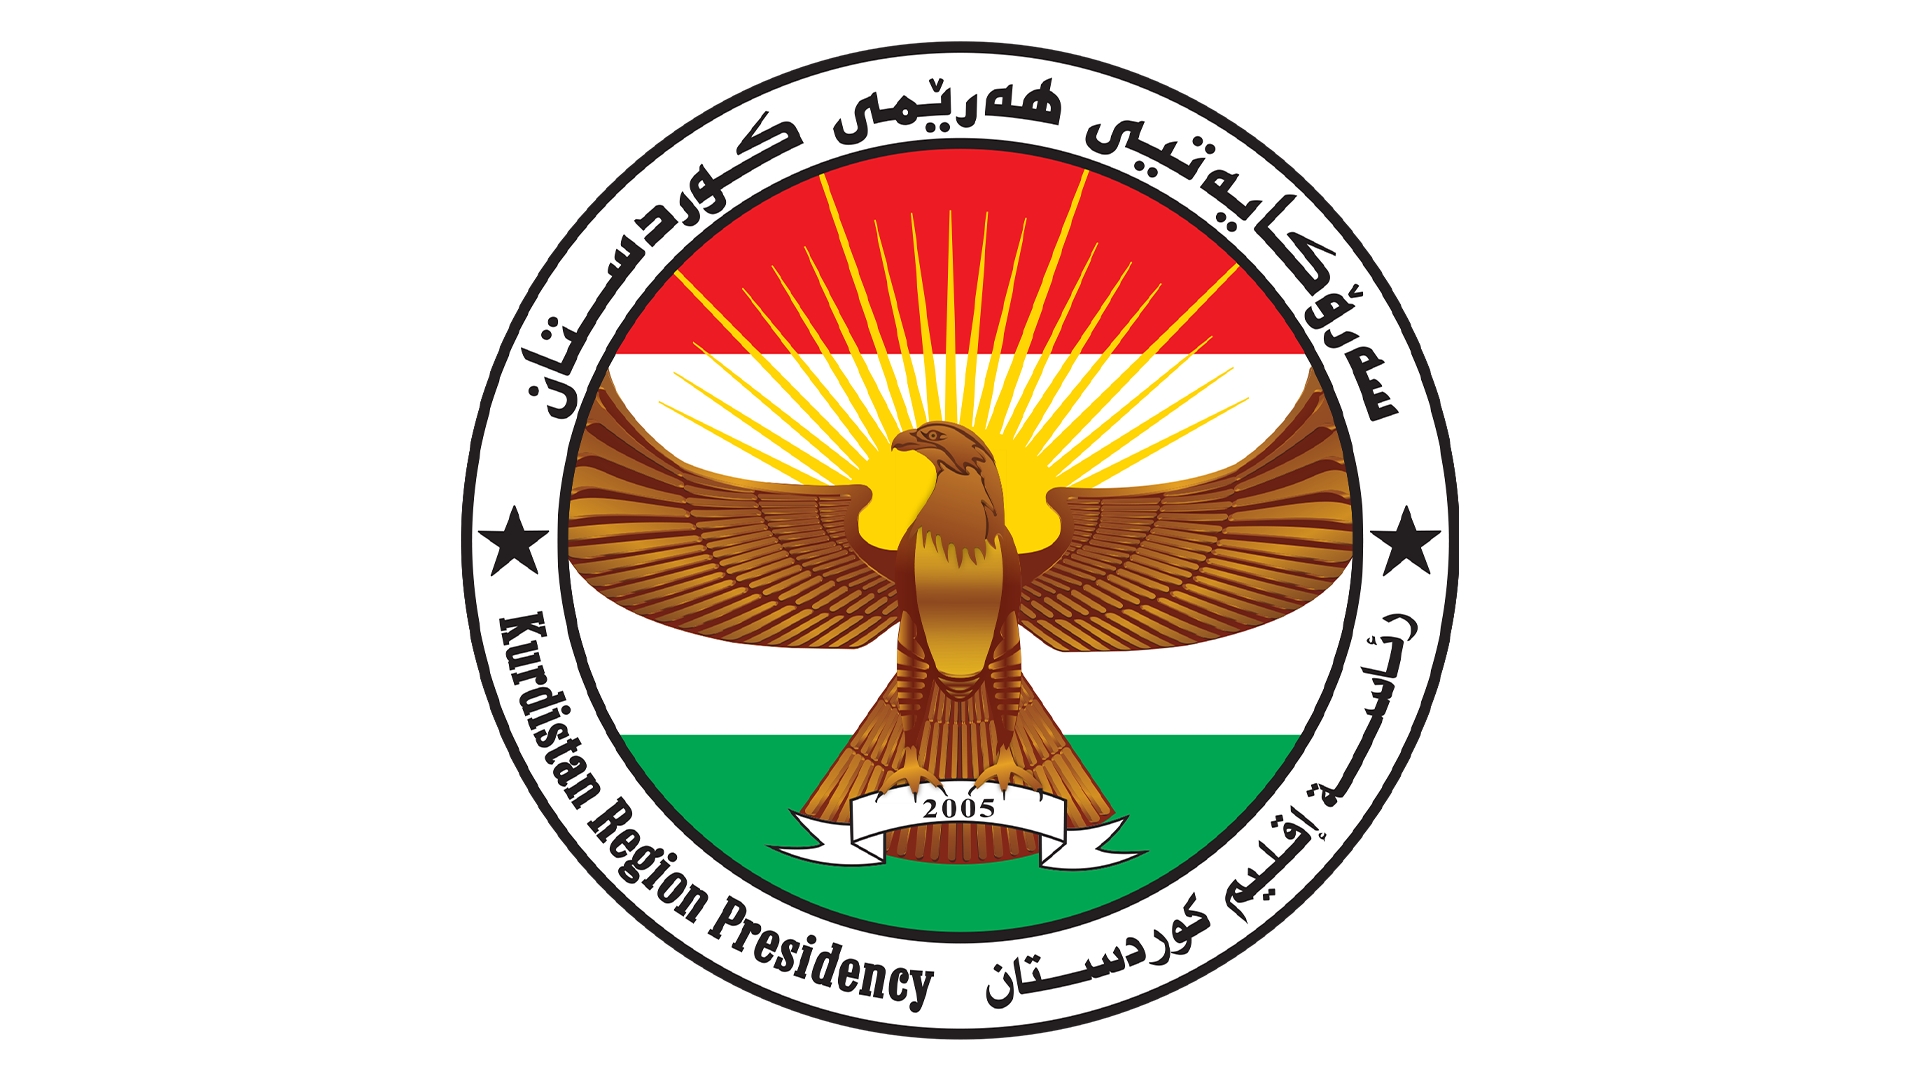 Kurdistan Region Presidency strongly condemns the attack on Erbil